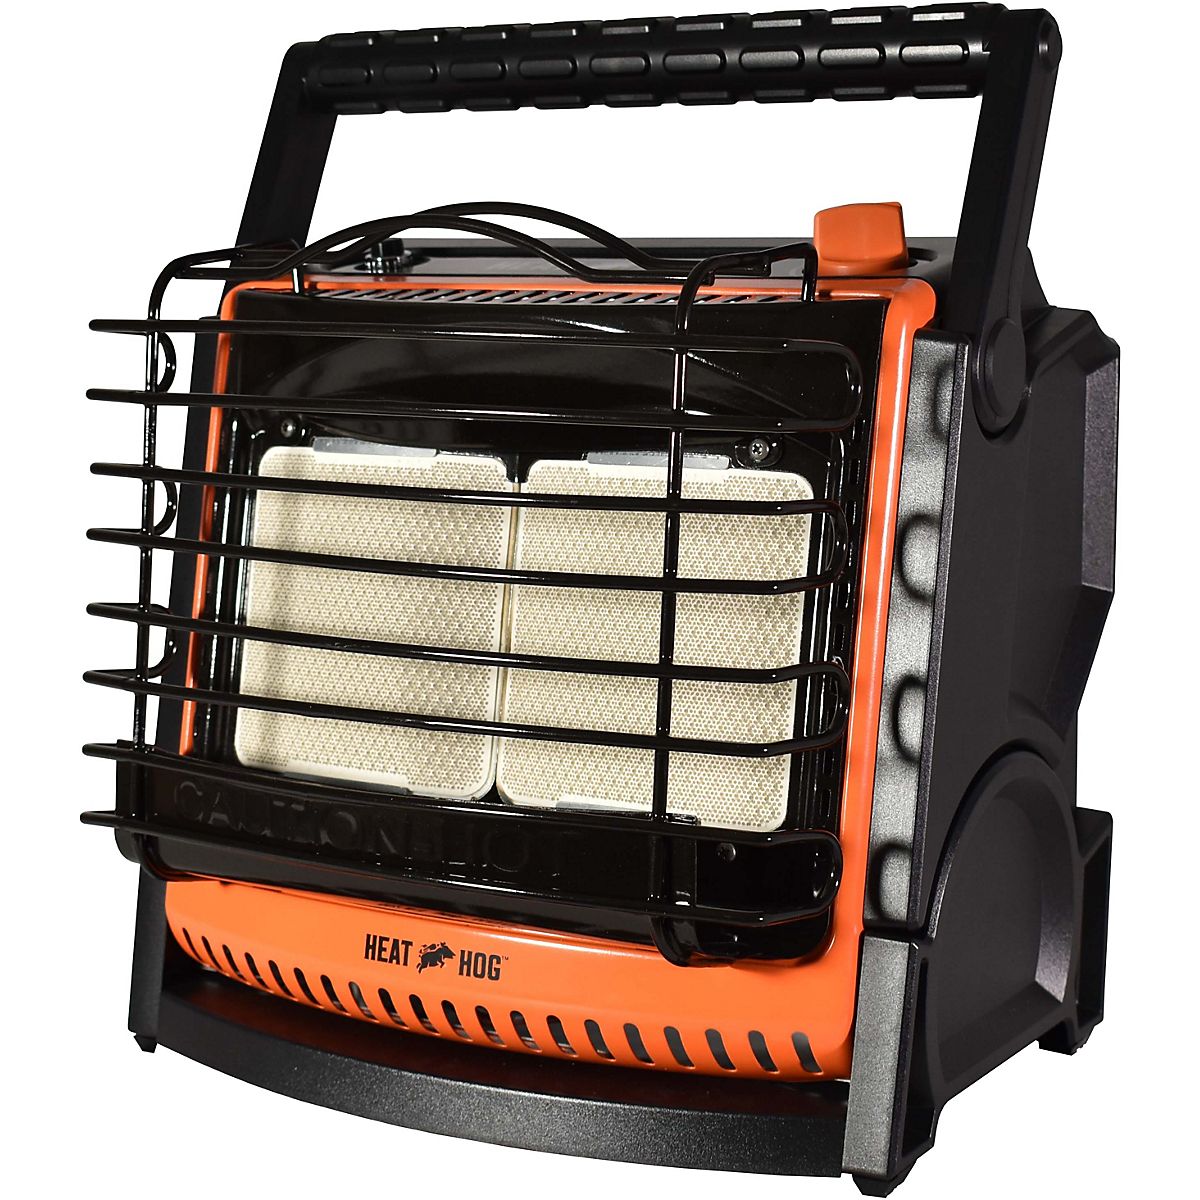 Heat Hog Portable Heater - general for sale - by owner - craigslist